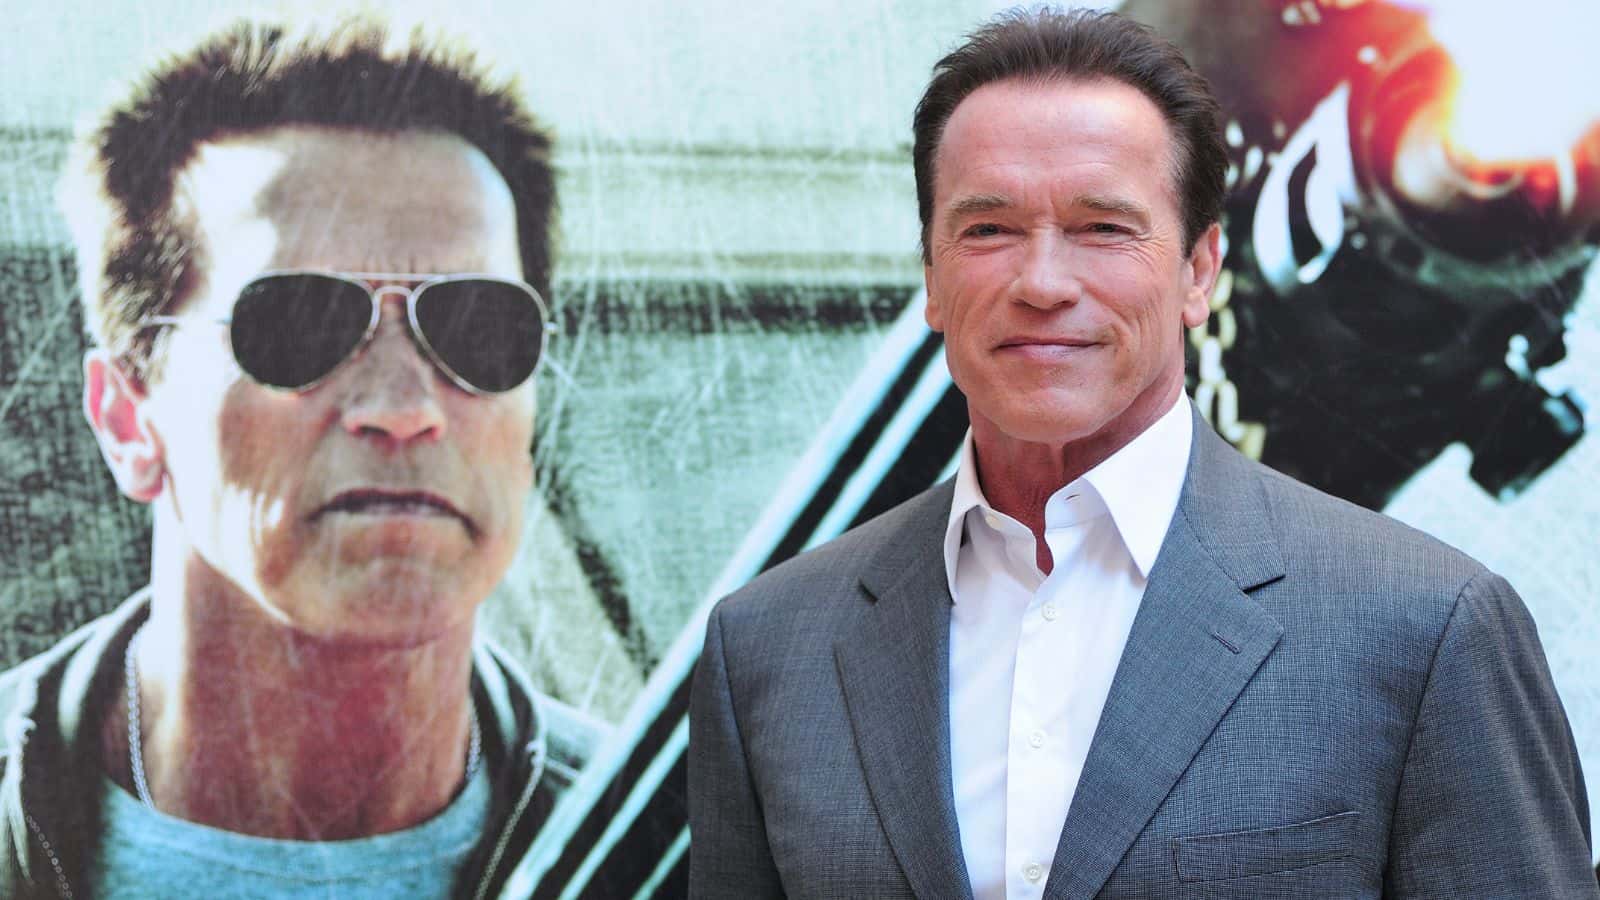 Arnold Schwarzenegger 1 lucacavallari _ Shutterstock.com